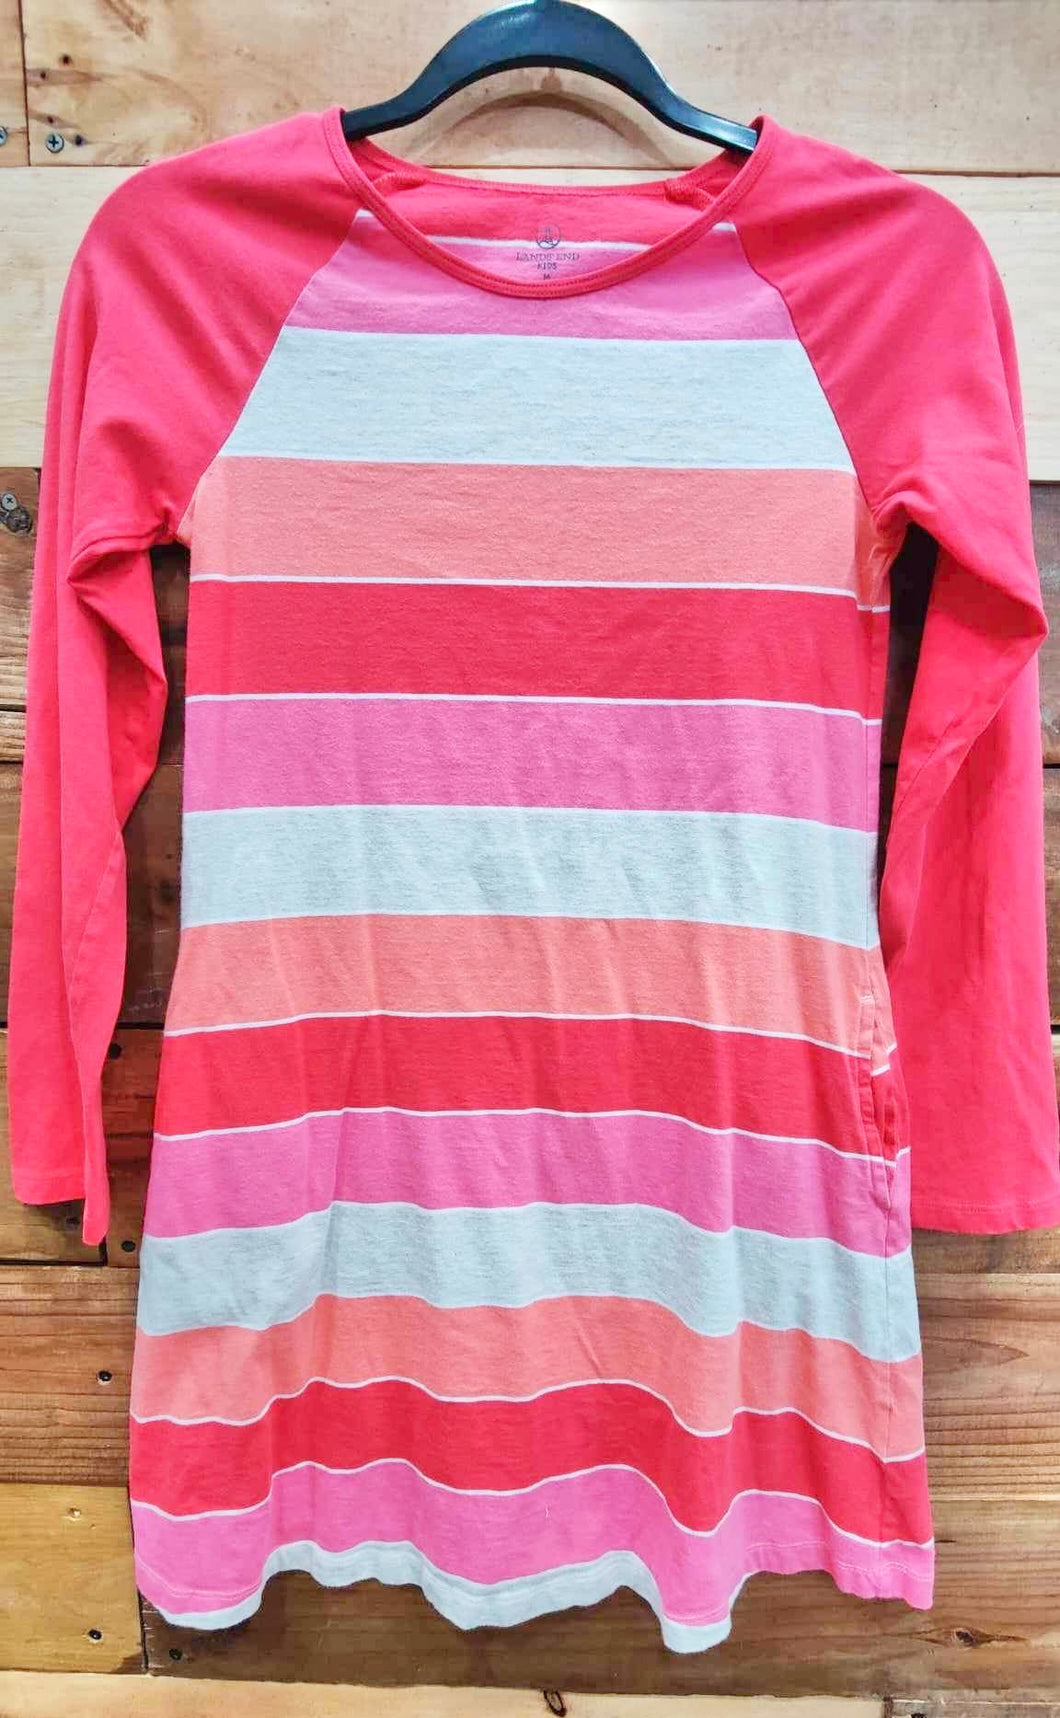 Land's End Pink Striped Dress Size 10-12